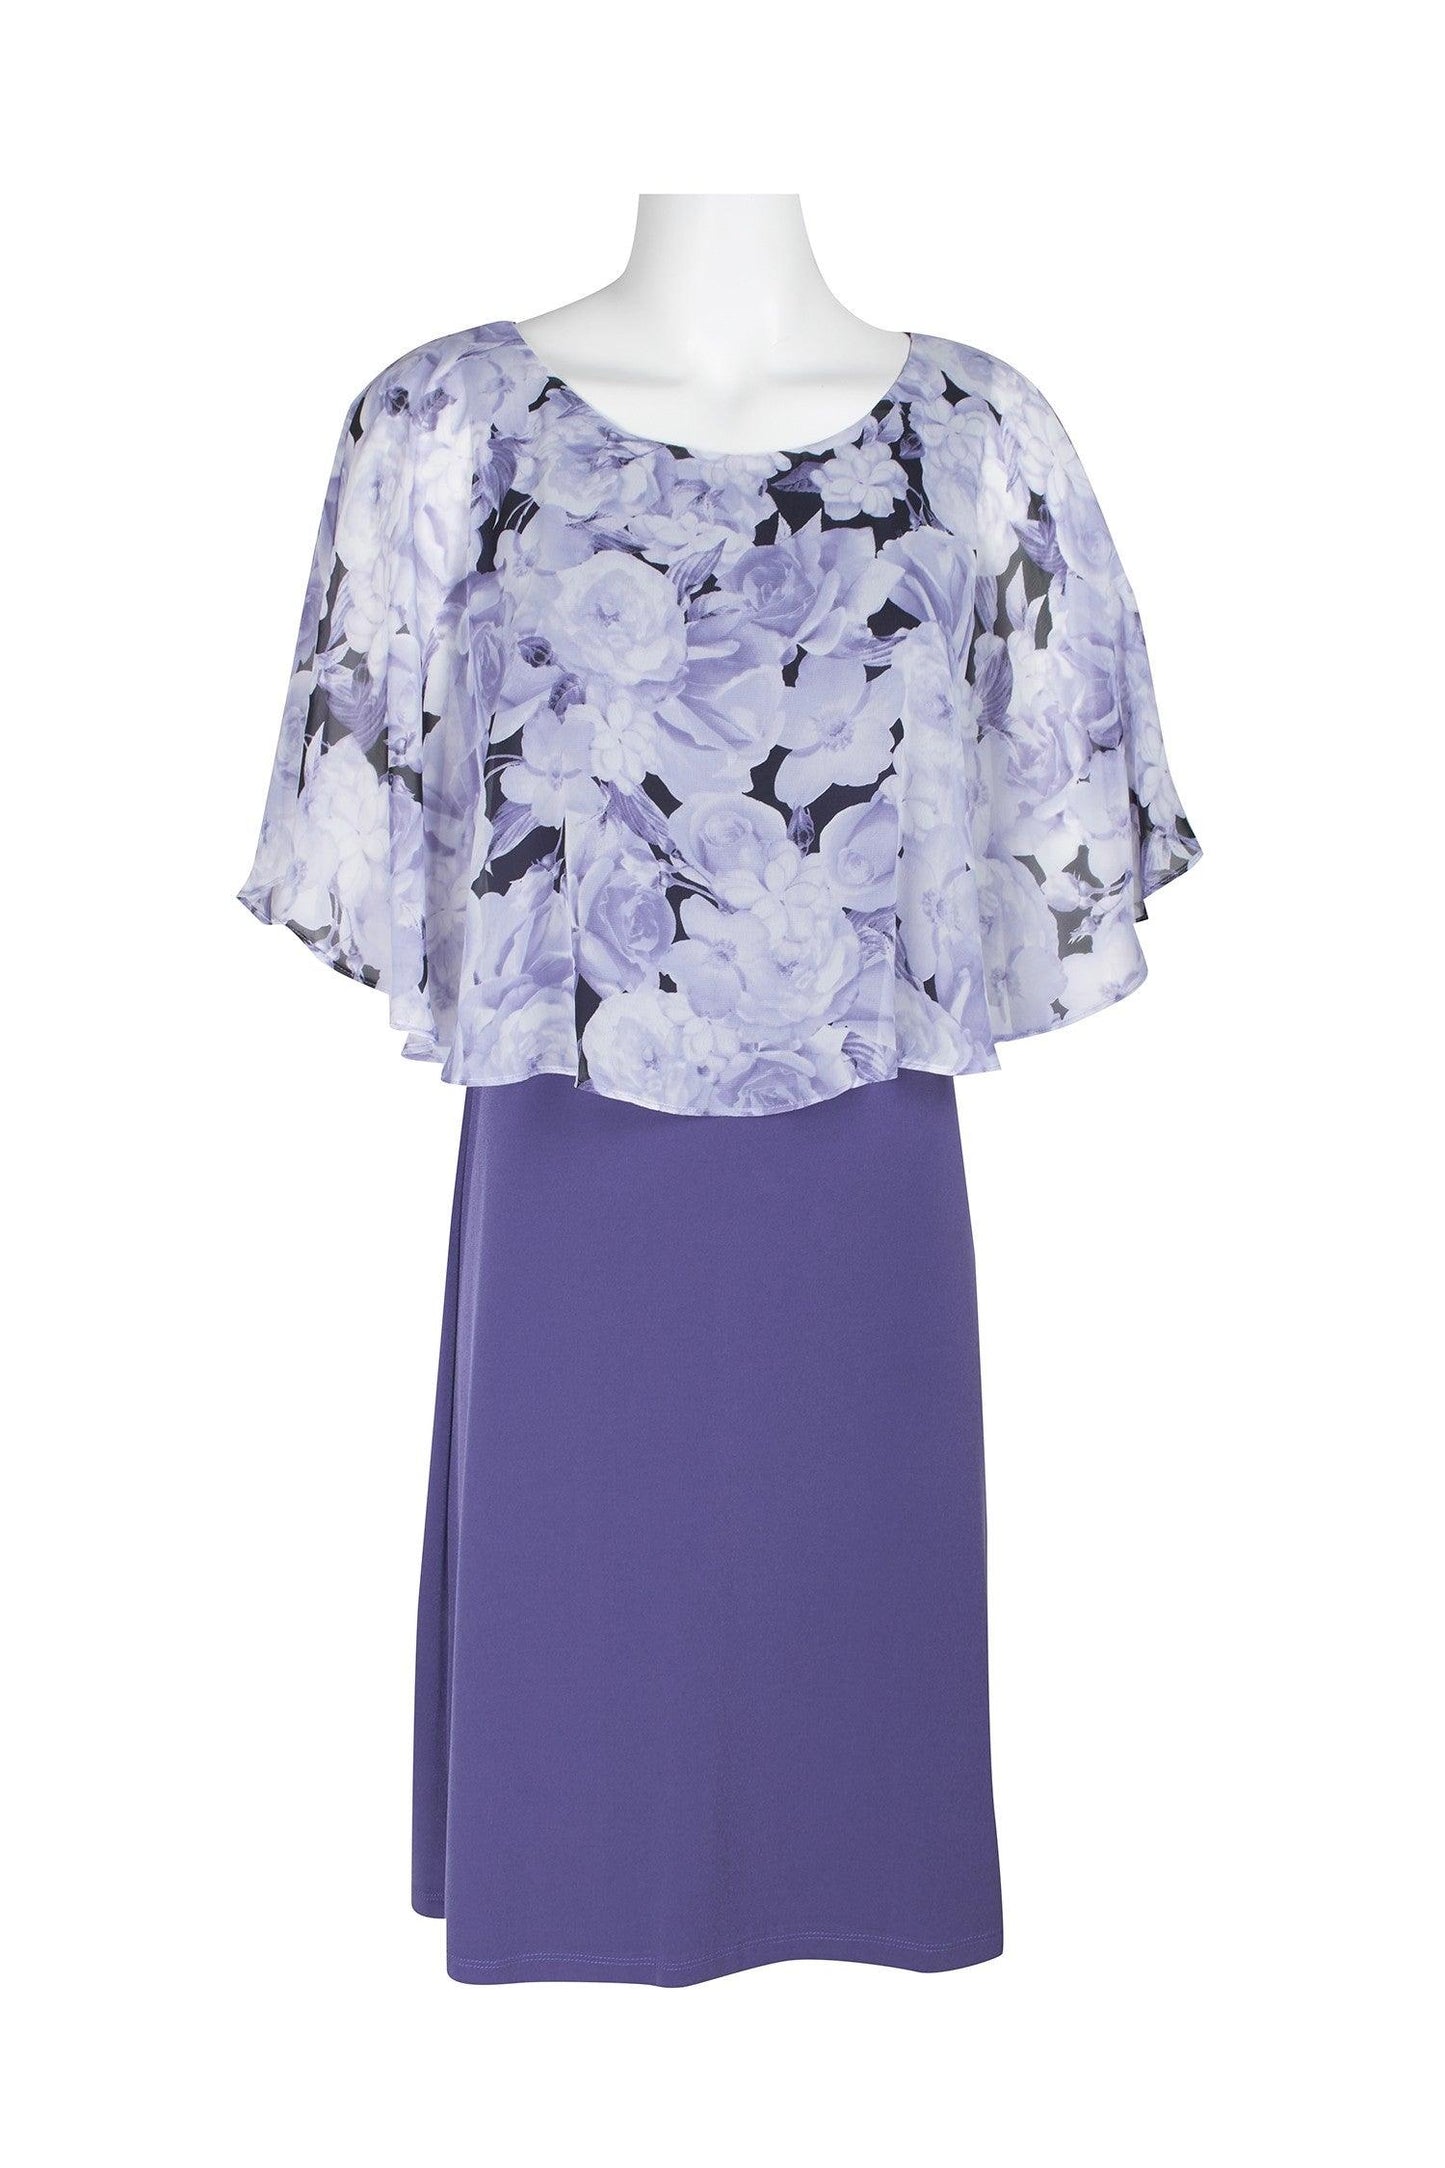 Connected Apparel Floral Chiffon Short Cape Dress - The Dress Outlet